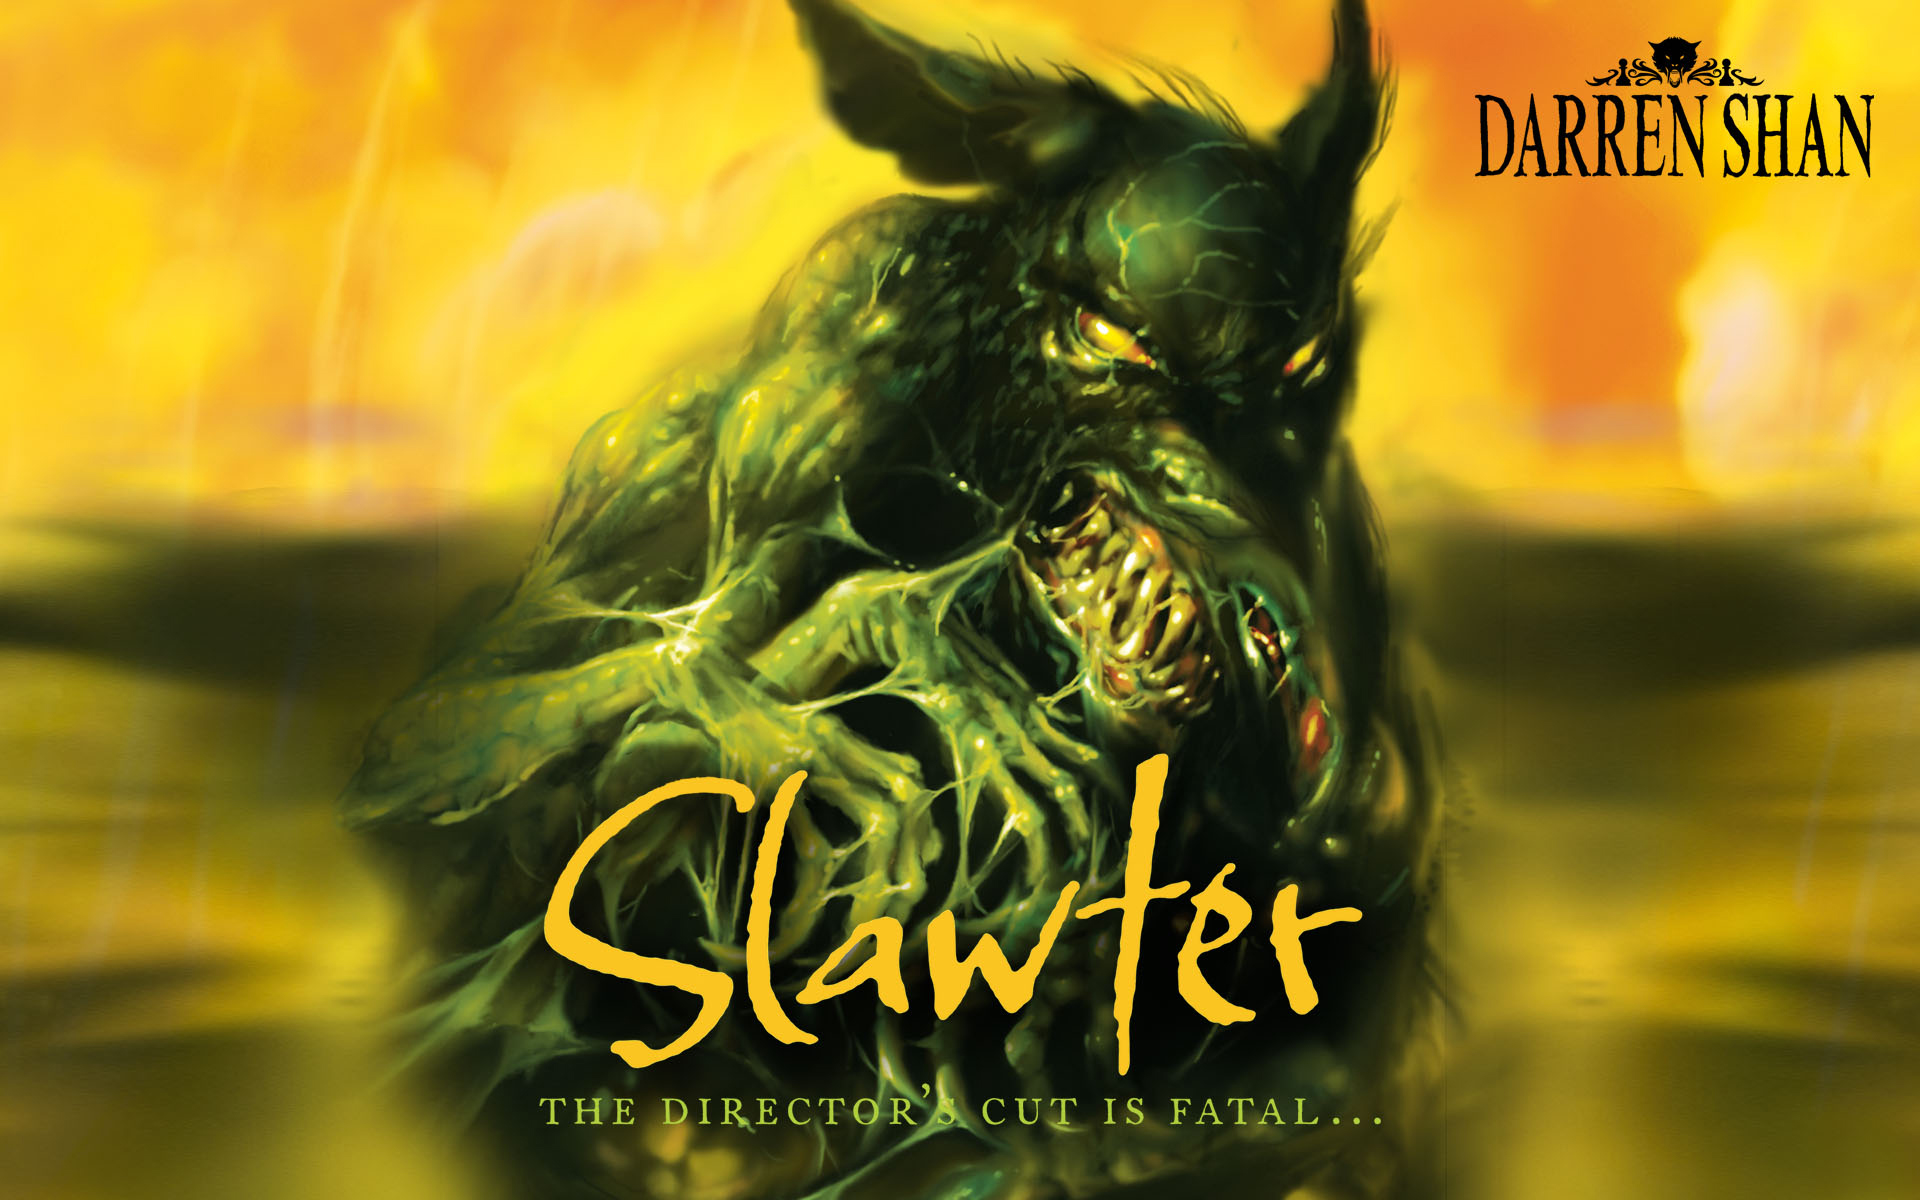 Darren Shan's Slawter: A captivating HD wallpaper featuring a demonic scene with blood.